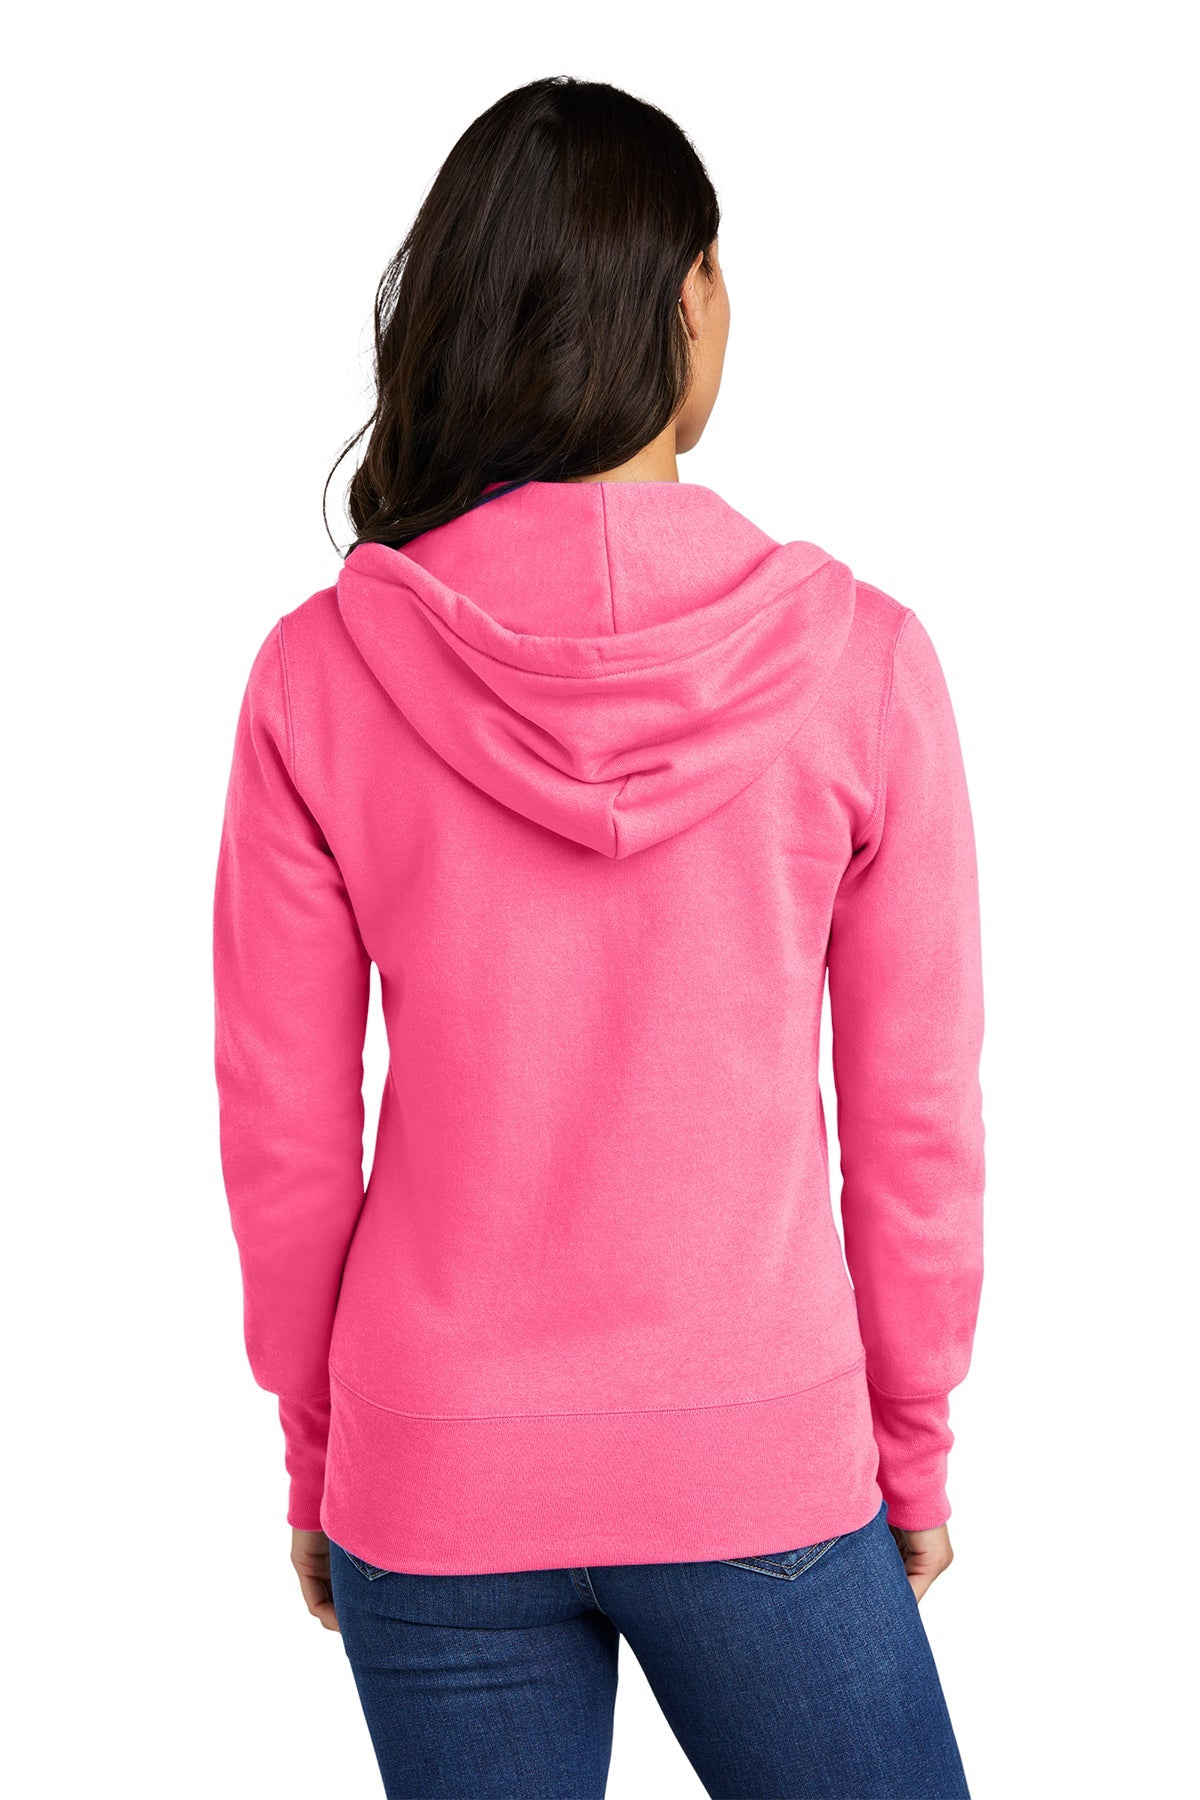 port & company_lpc78zh _neon pink_company_logo_sweatshirts